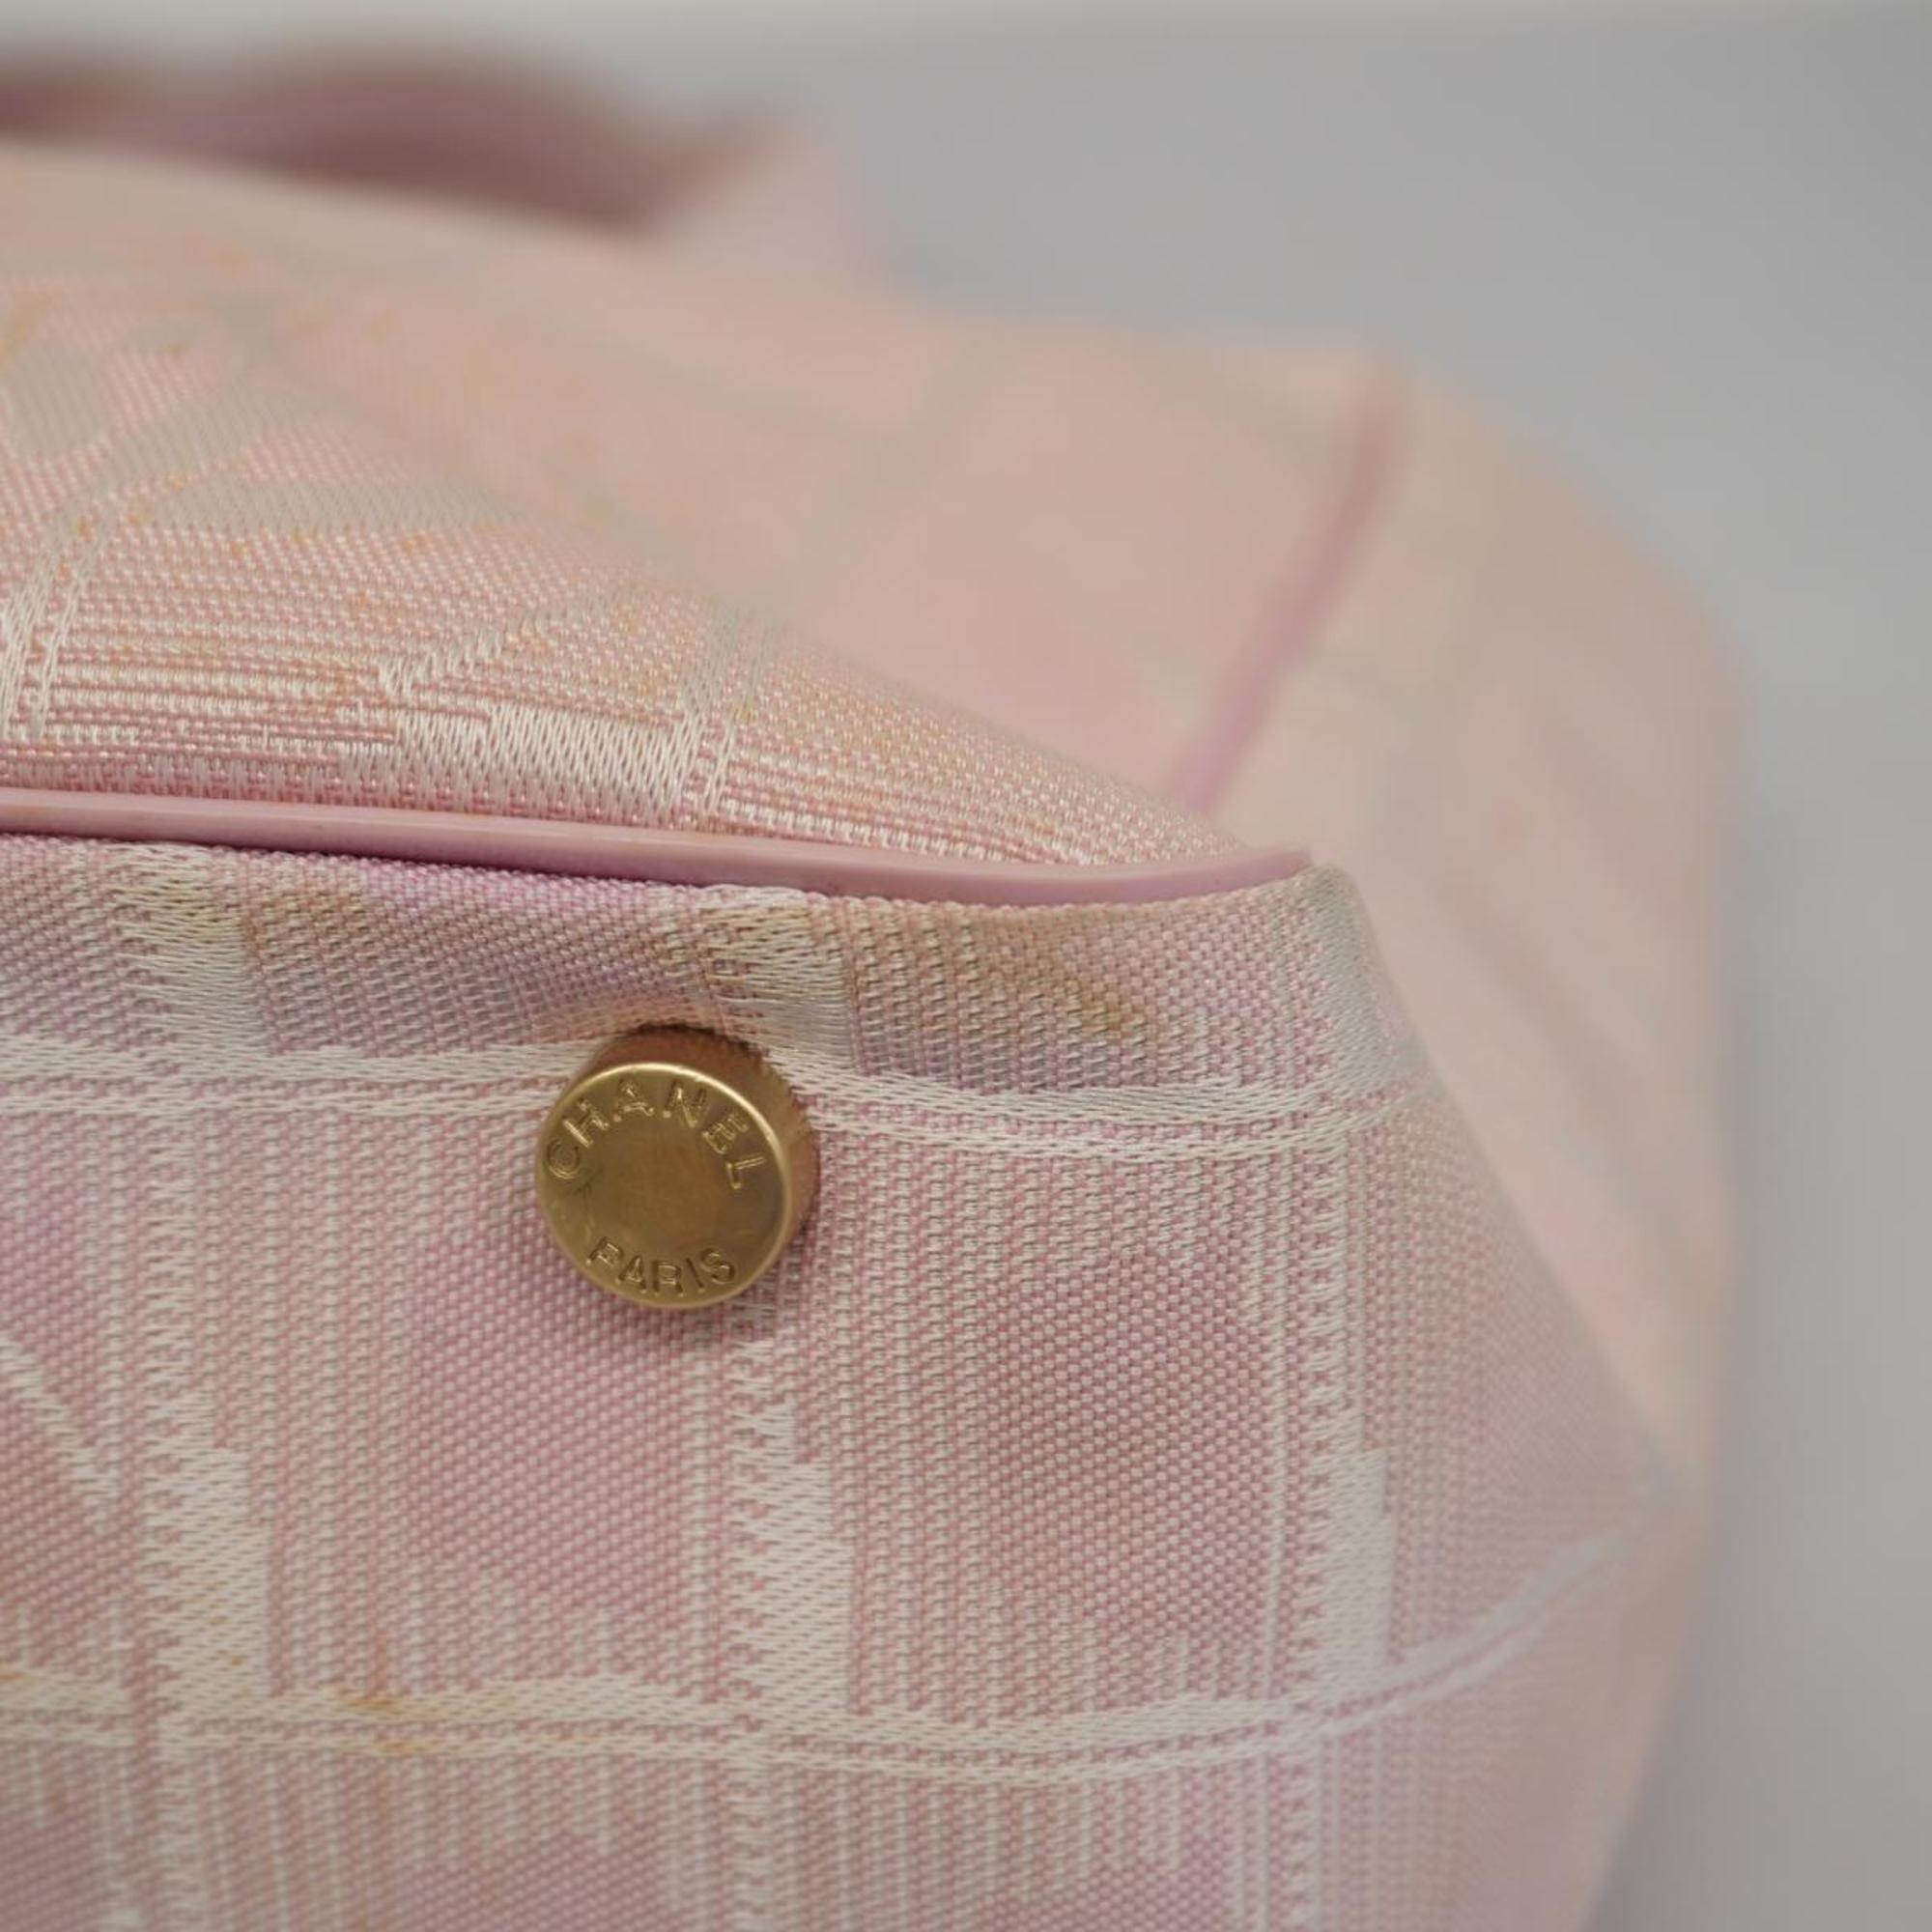 Chanel Tote Bag New Travel Nylon Pink Women's